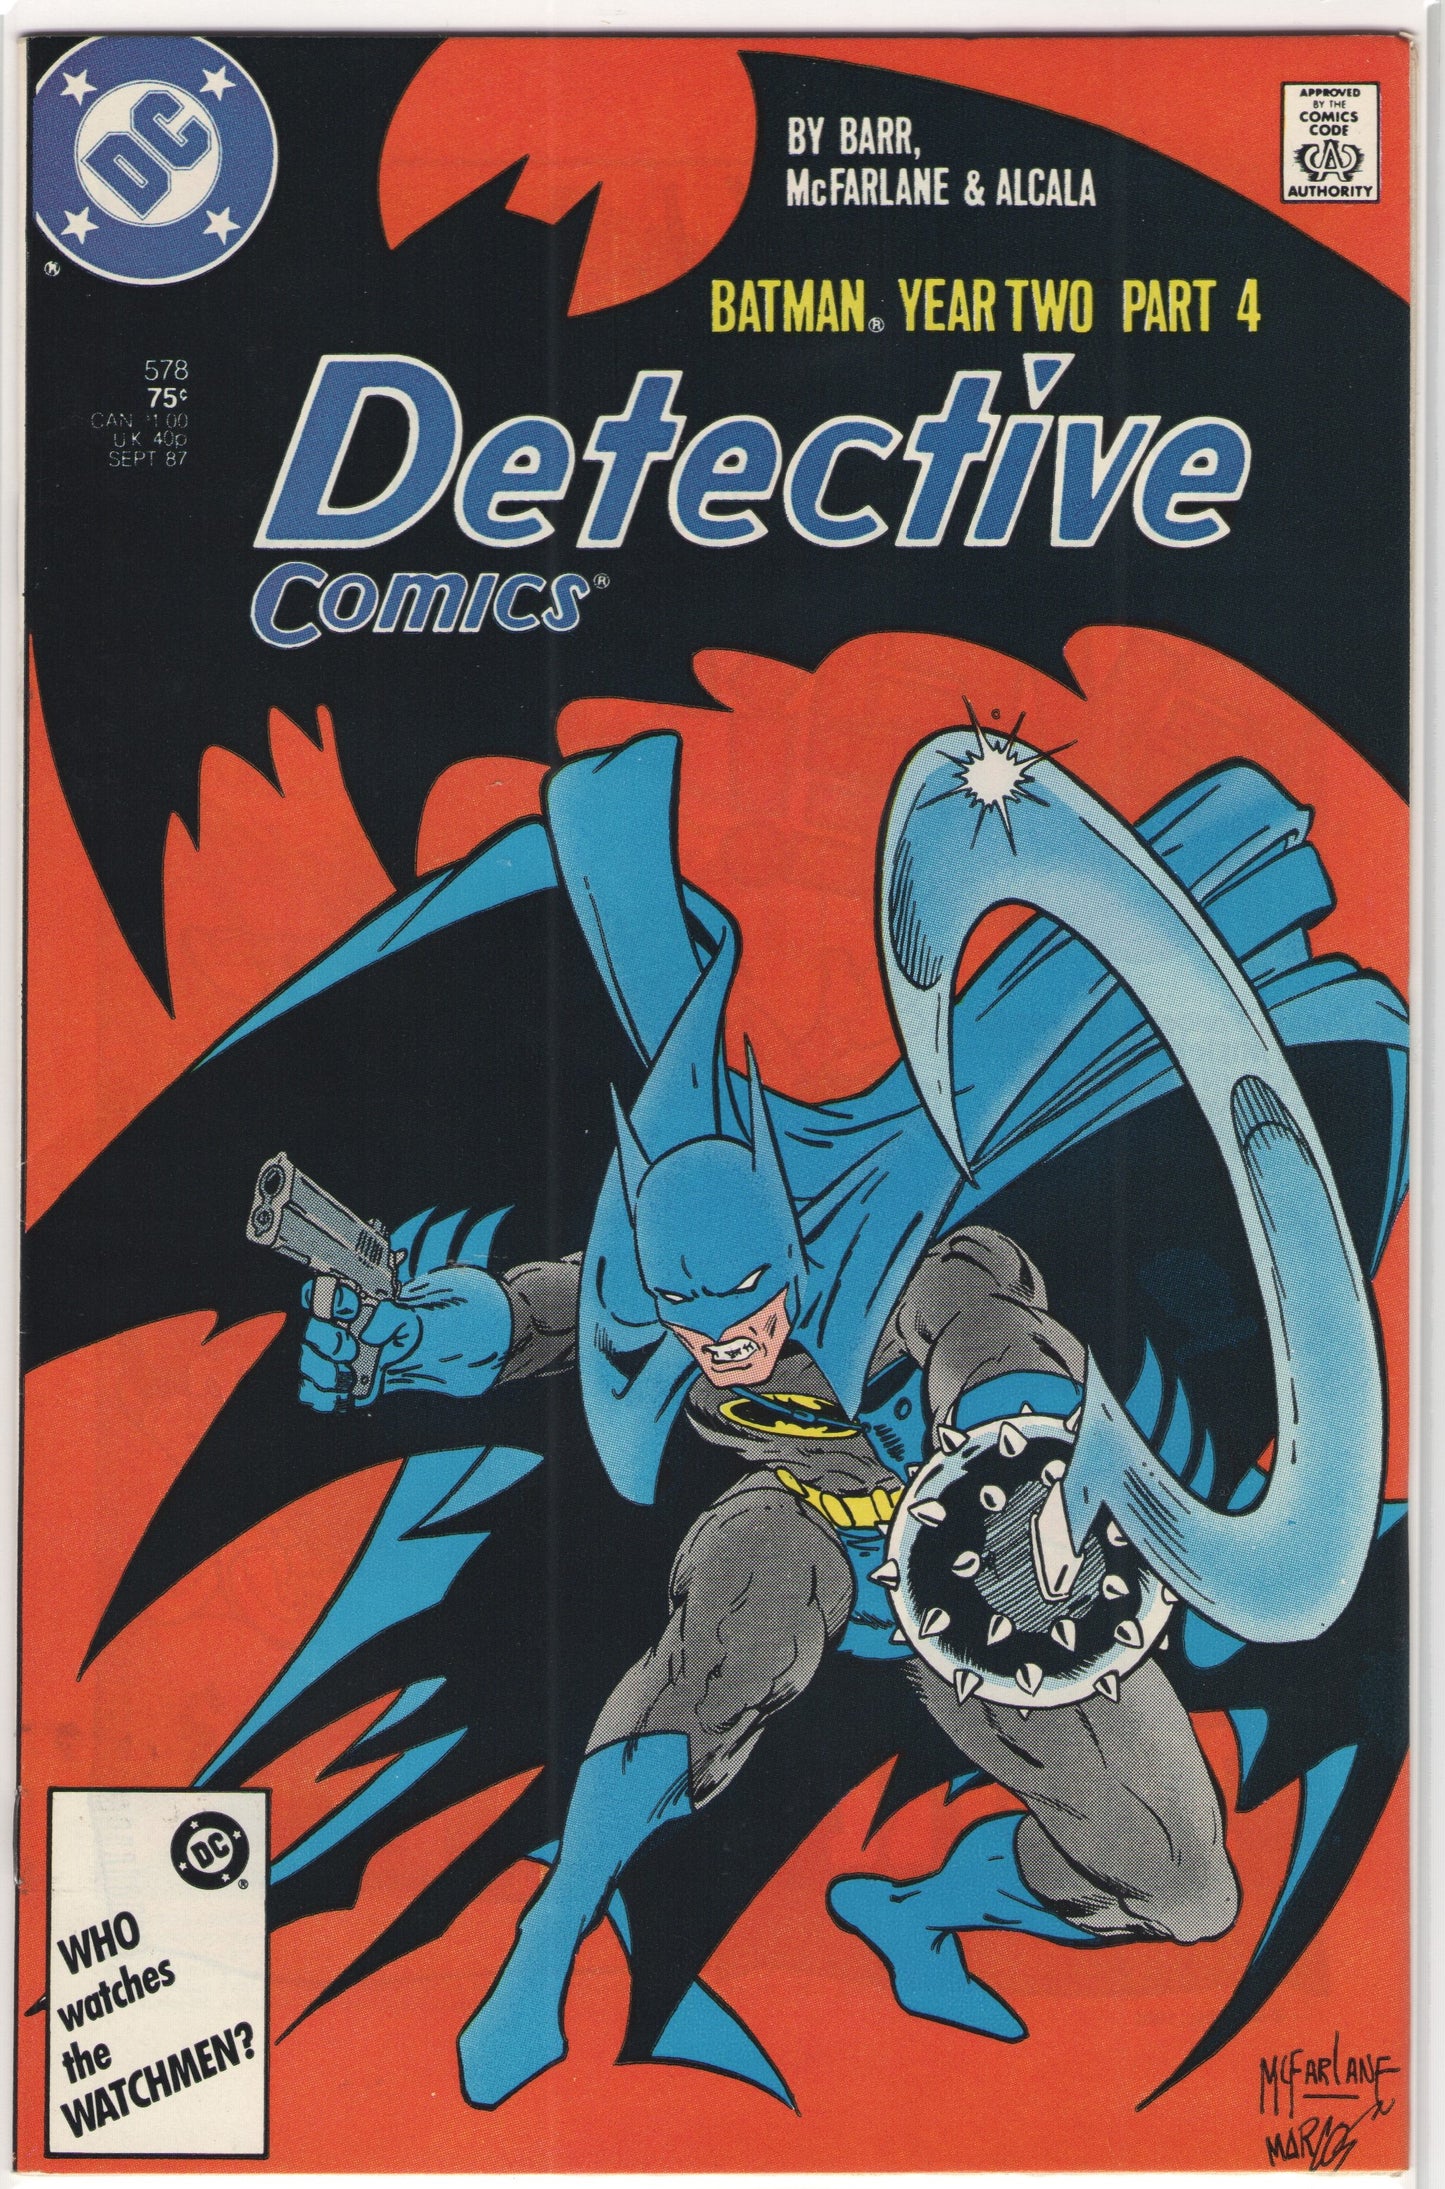 Detective Comics, "Batman: Year Two", #575-578 (1987)